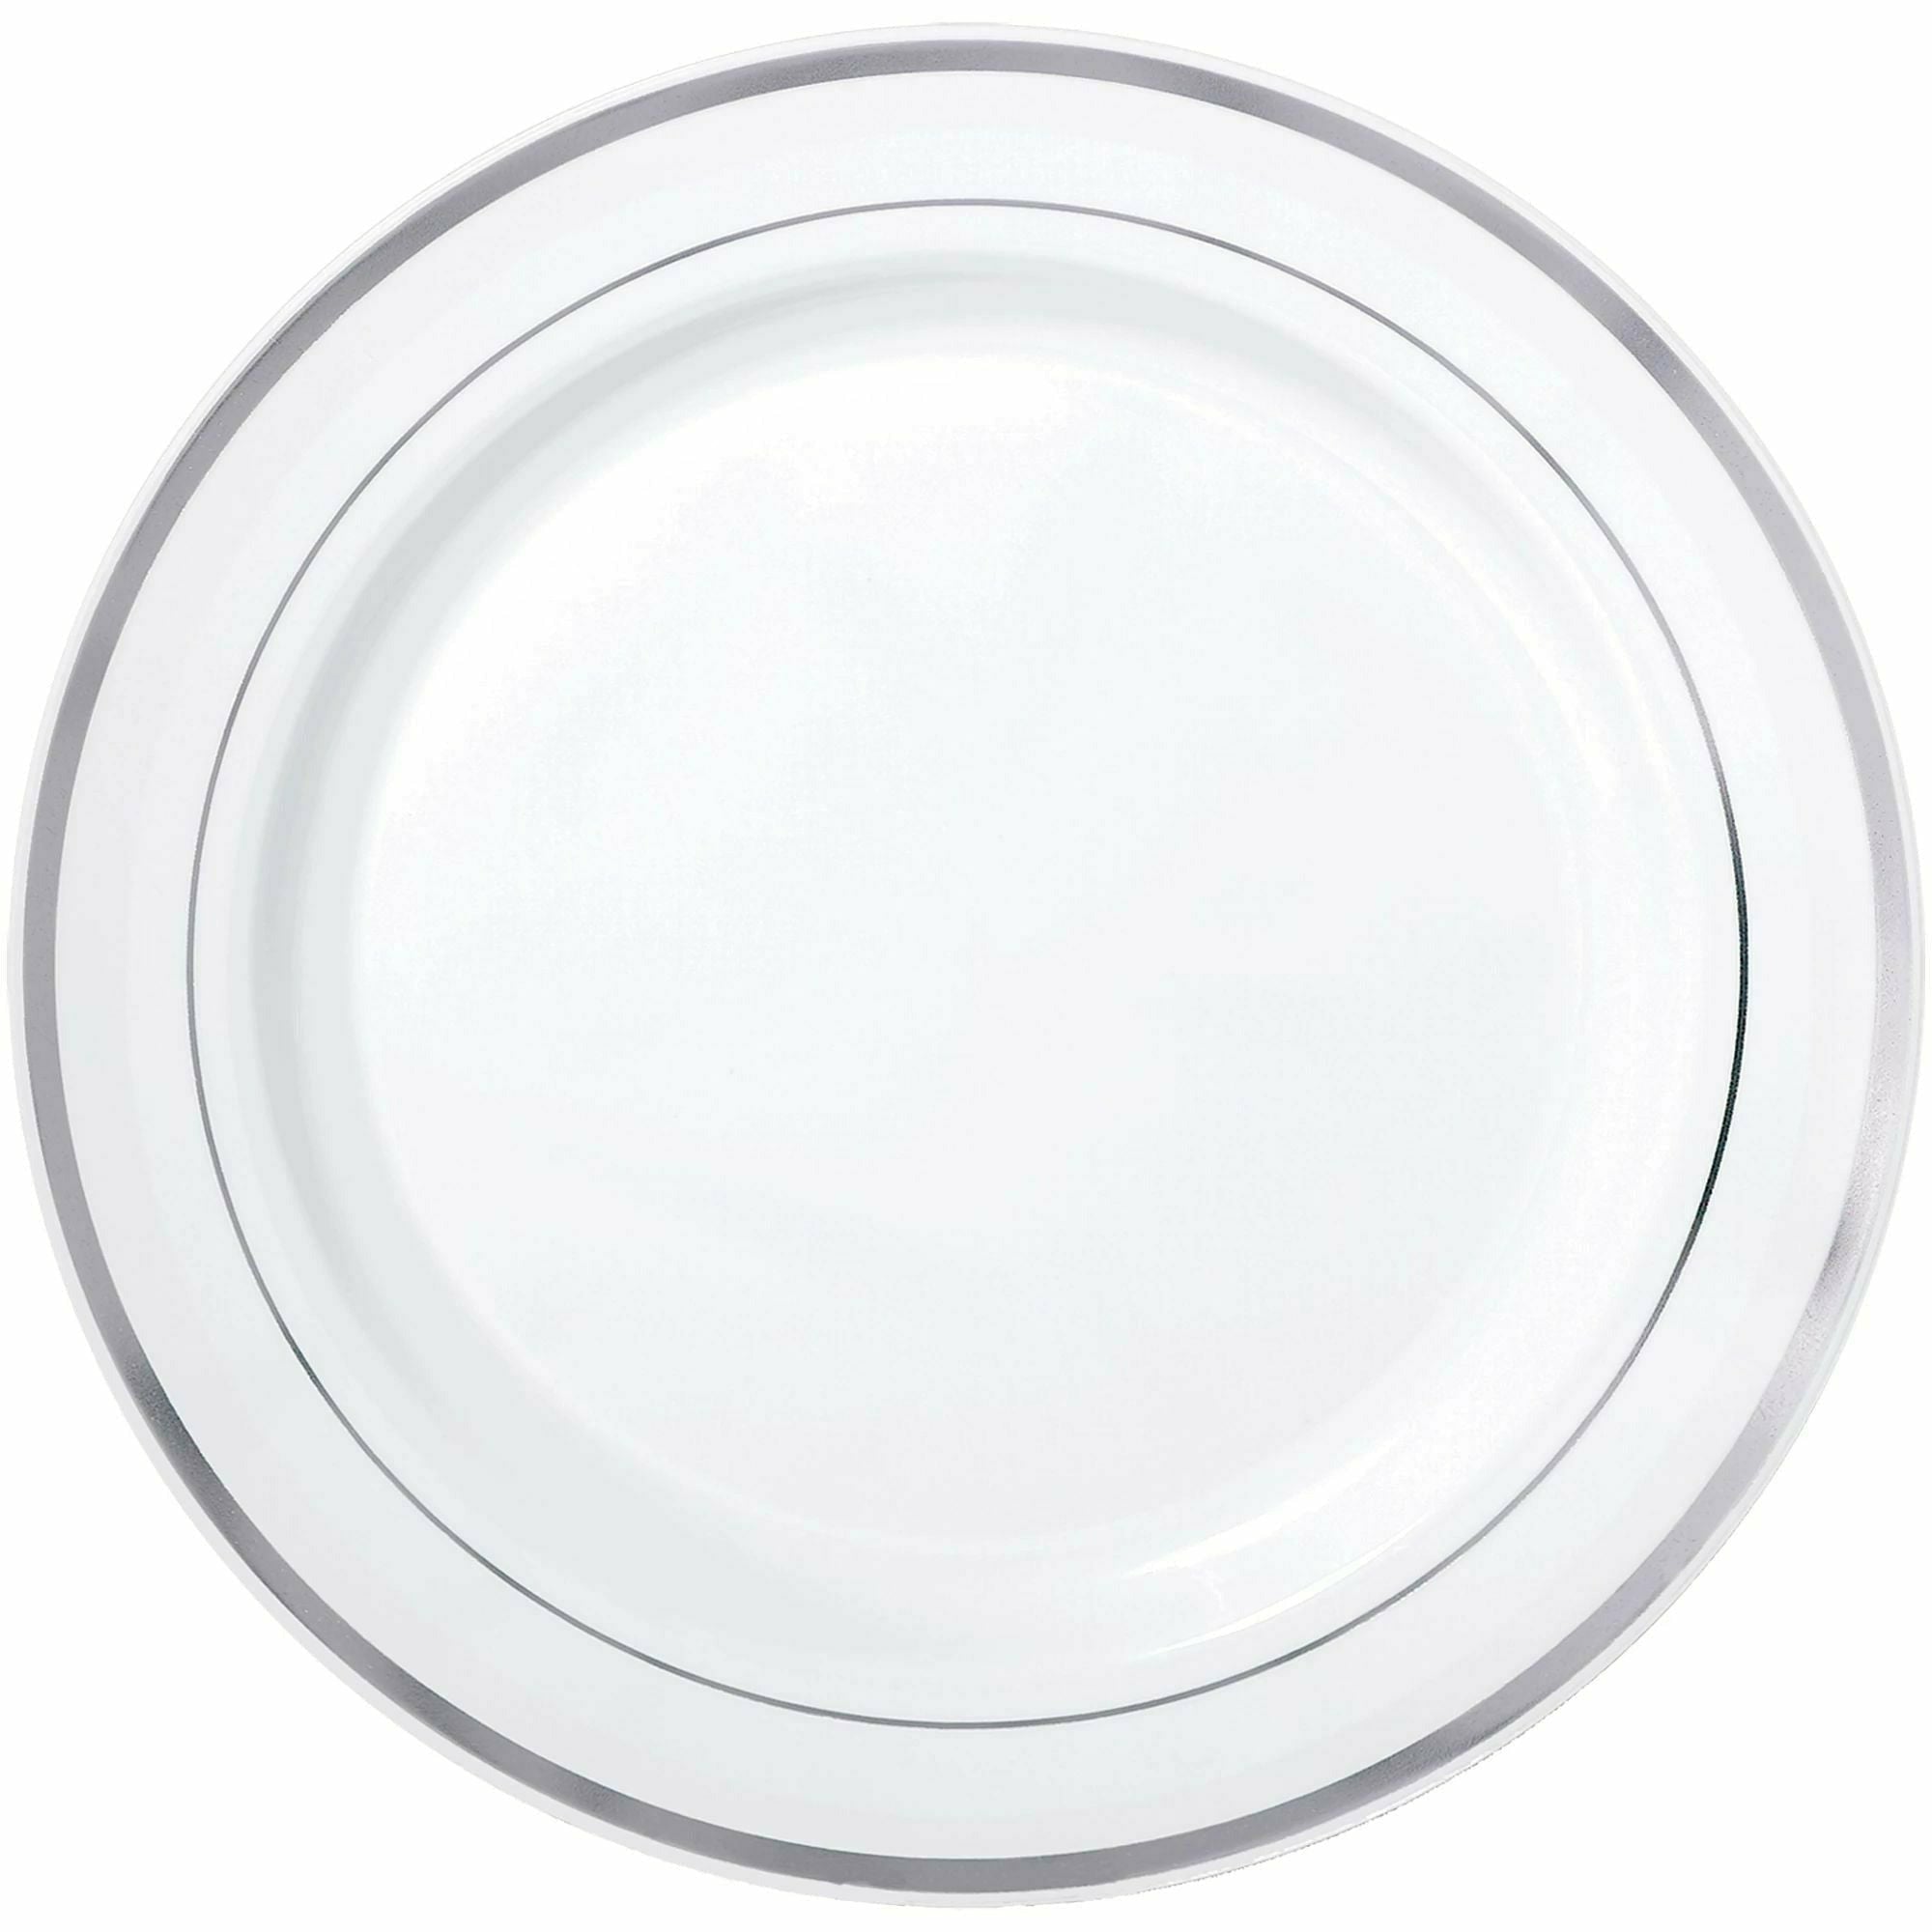 Amscan BASIC Premium 10 1/4" Plastic Plate with Sliver Trim